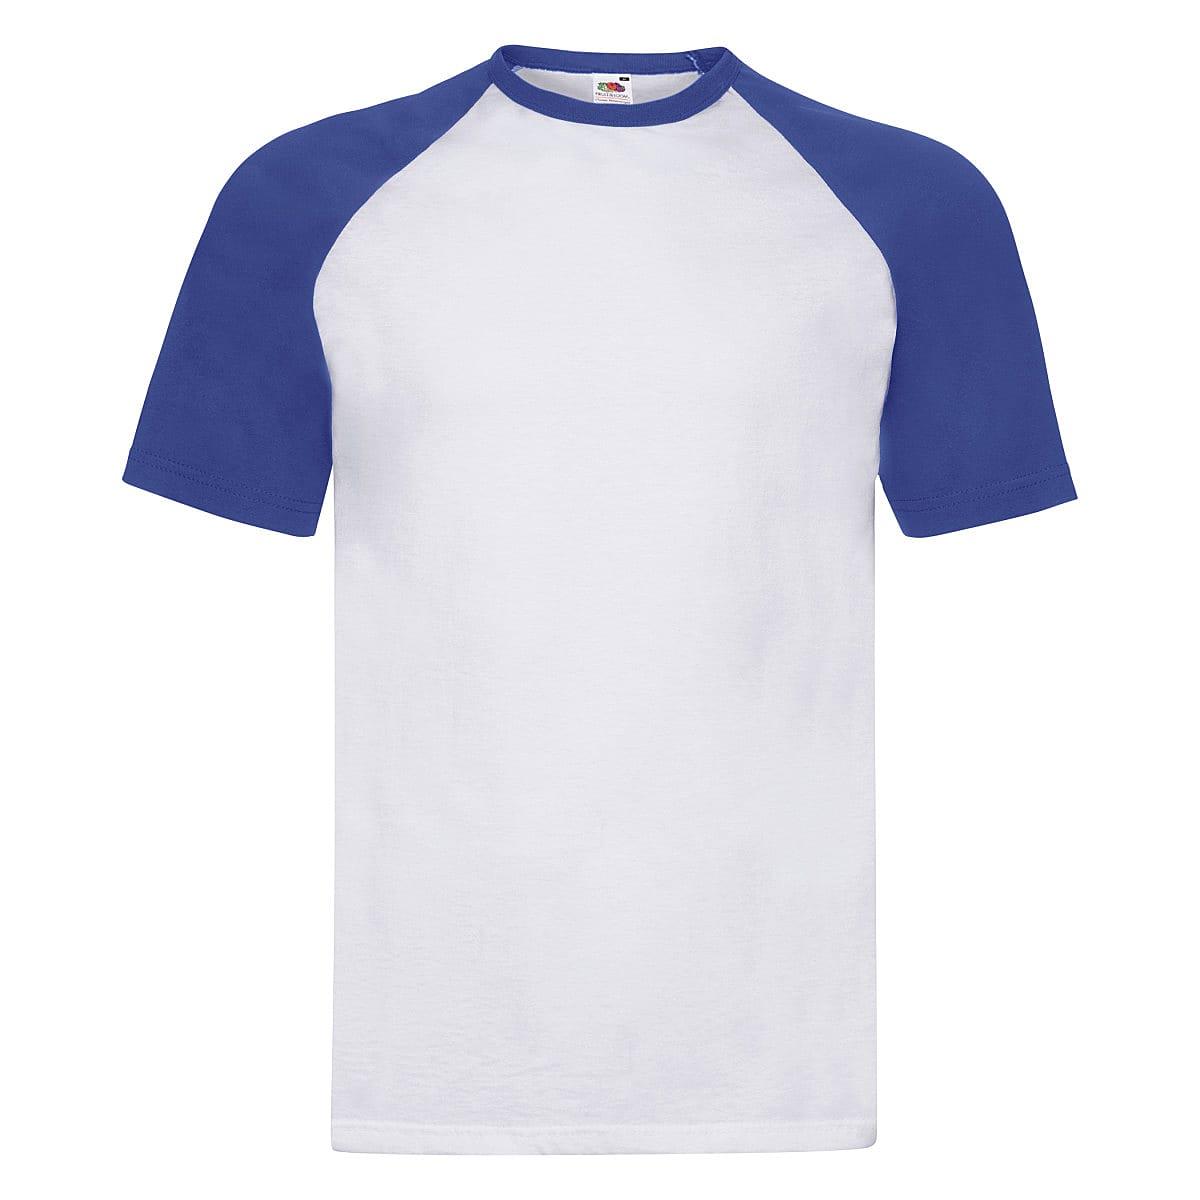 Fruit Of The Loom Short-Sleeve Baseball T-Shirt in White / Royal Blue (Product Code: 61026)